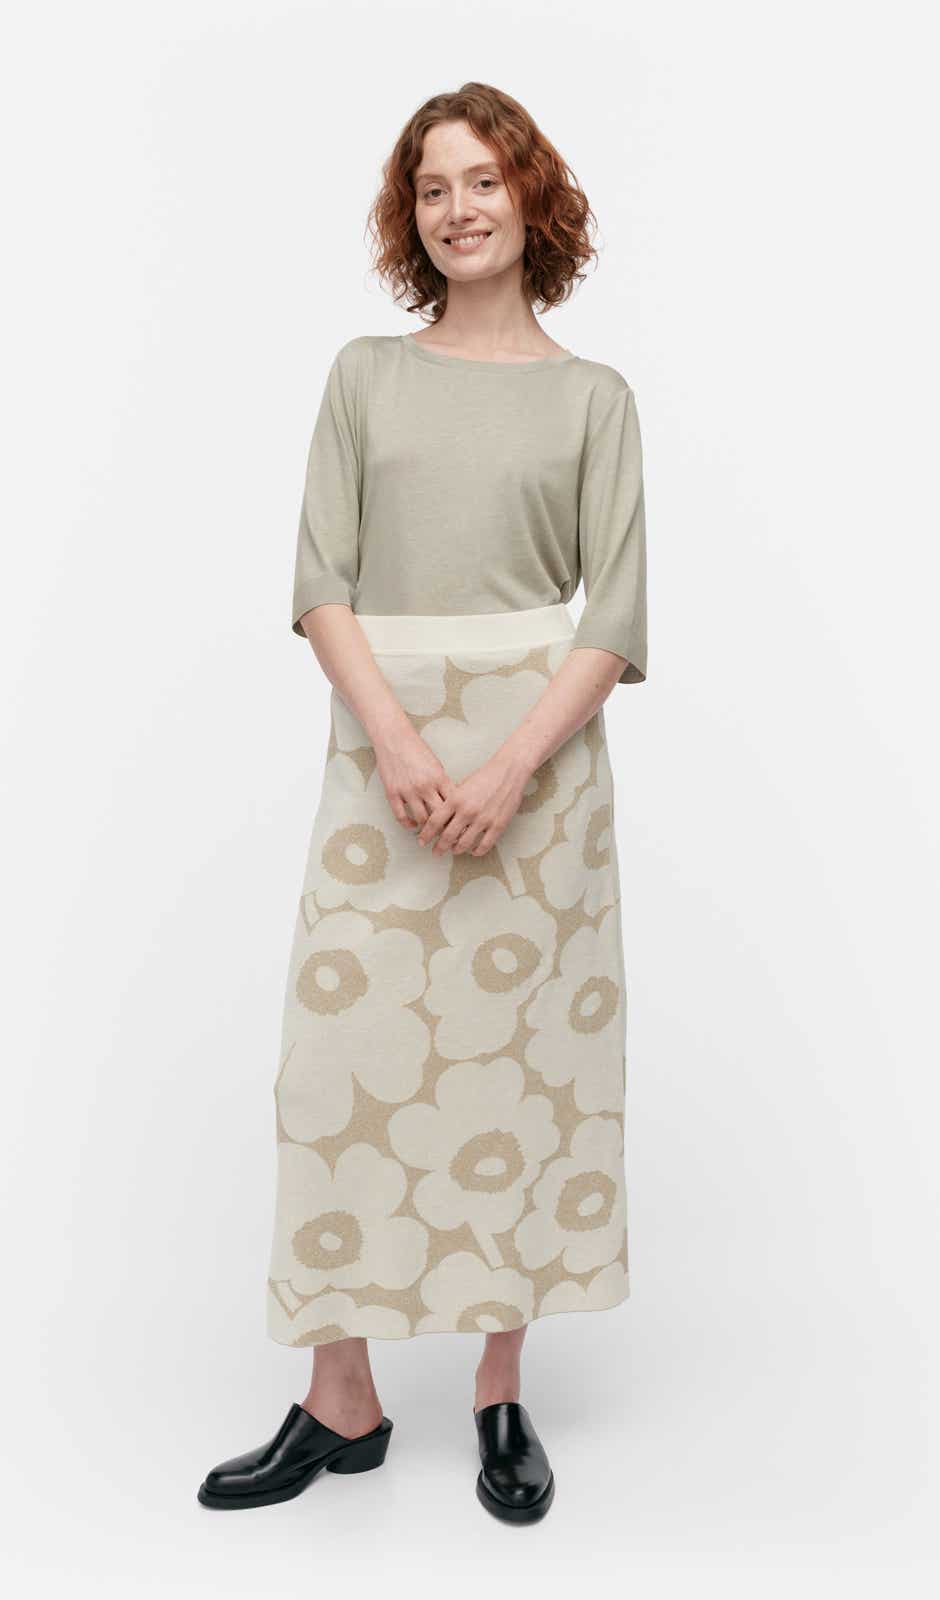 Kvaternio Pieni Unikko Ii knitted skirt – cotton and linen blend